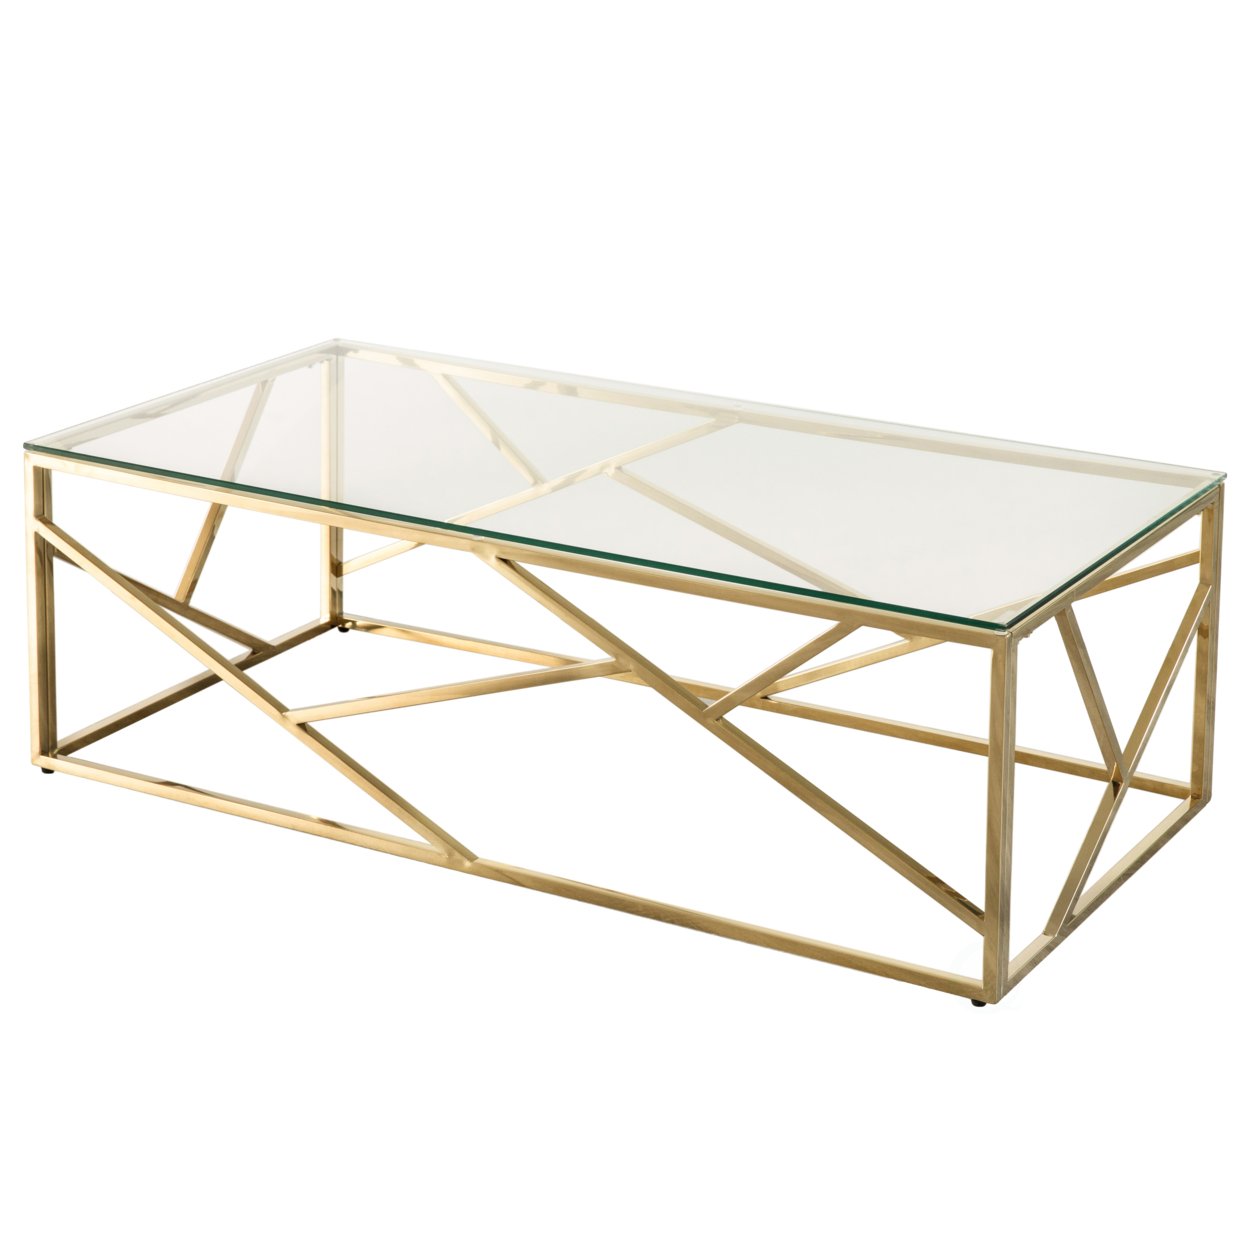 Decorative Rectangular Glass Top Metal Modern Coffee Table - gold